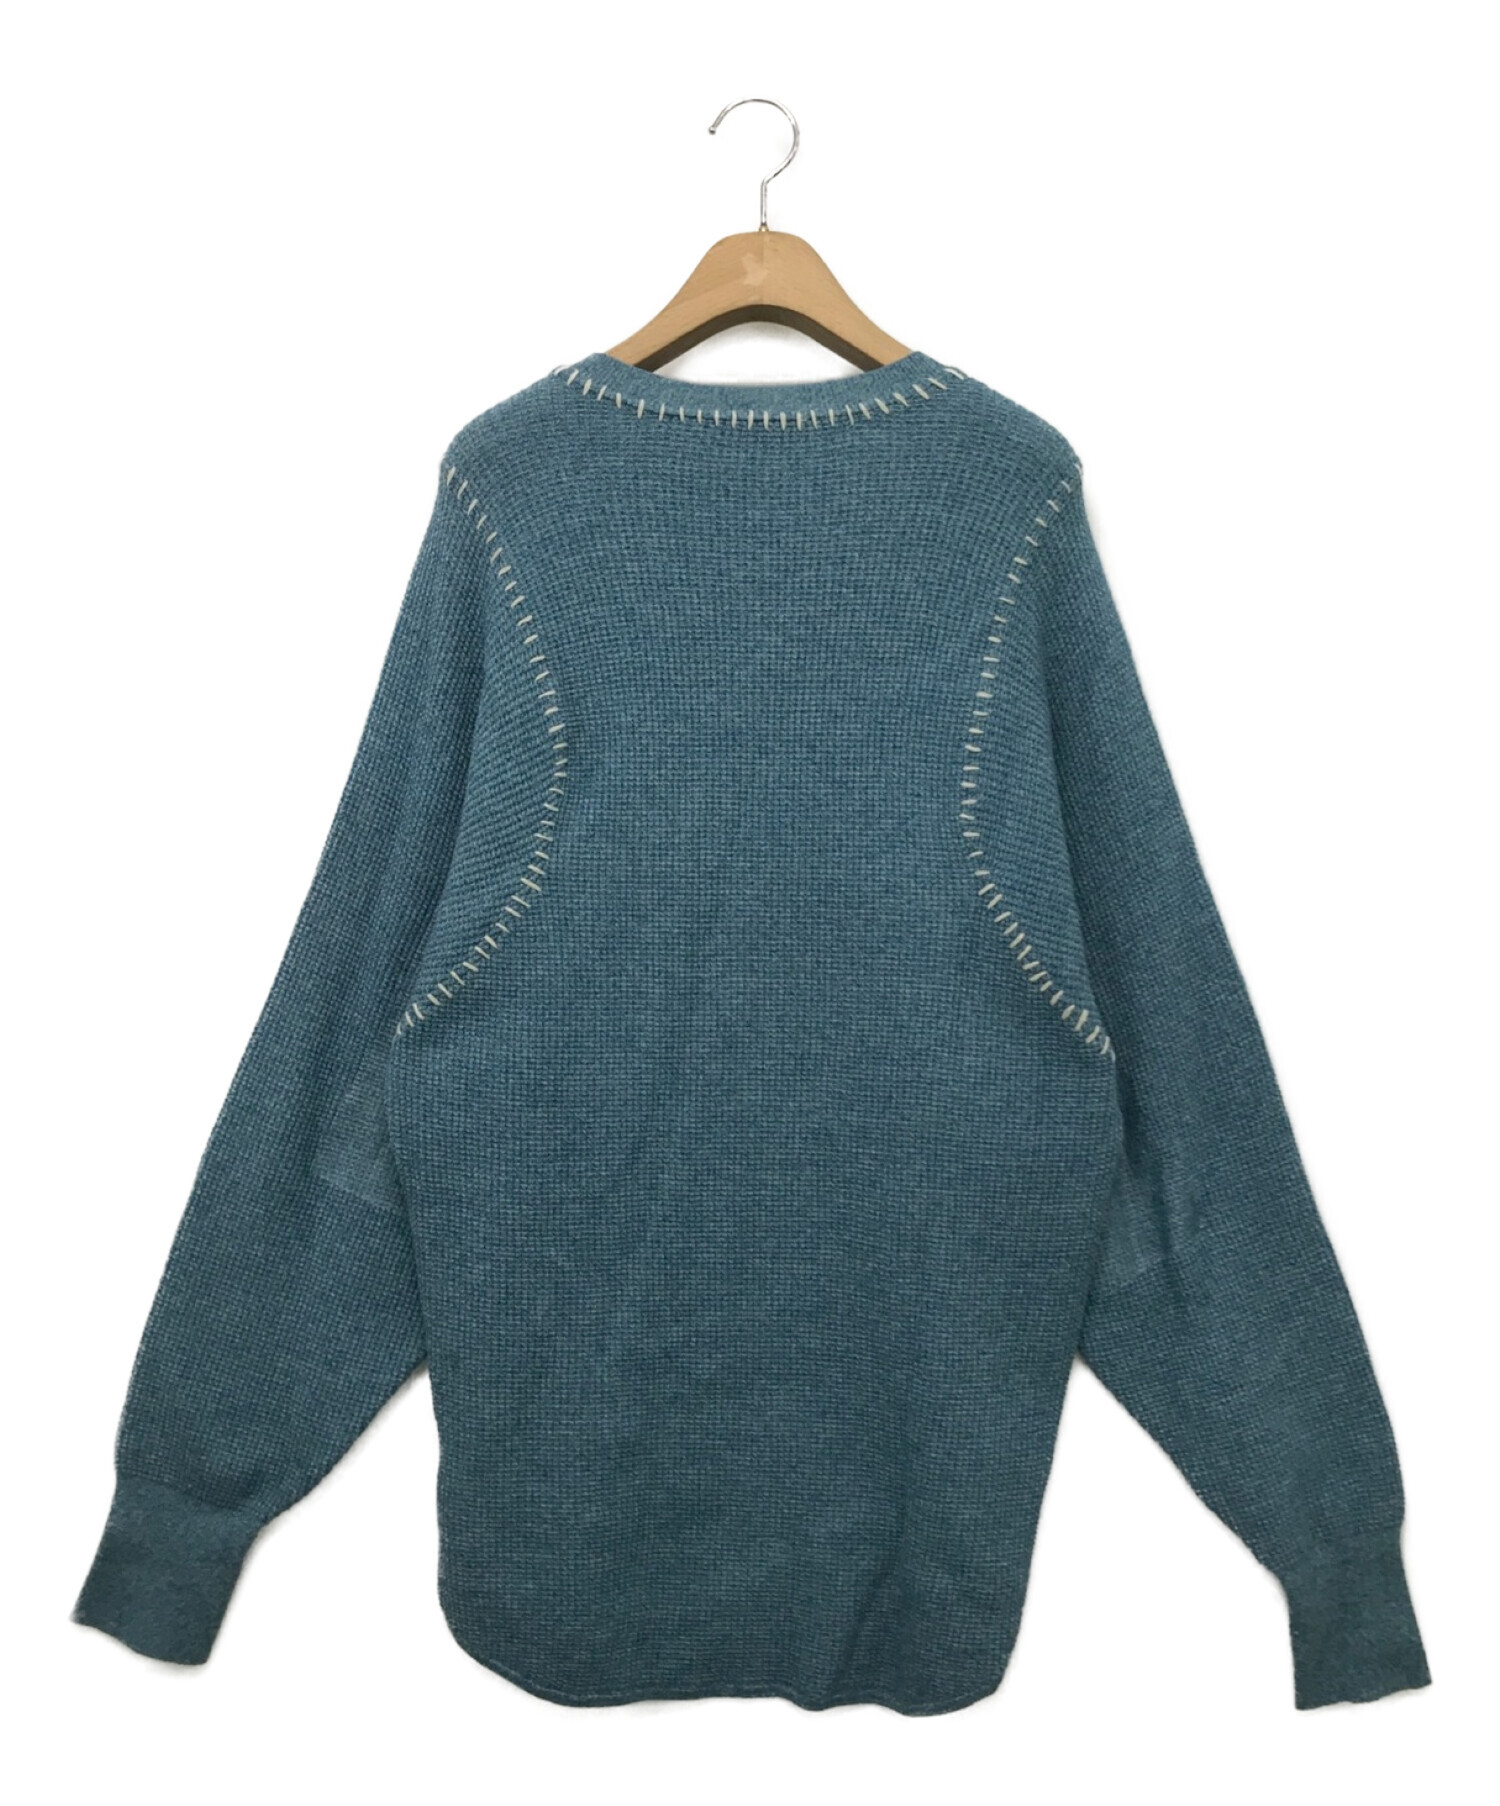 soduk (スドーク) thermal knit pullover